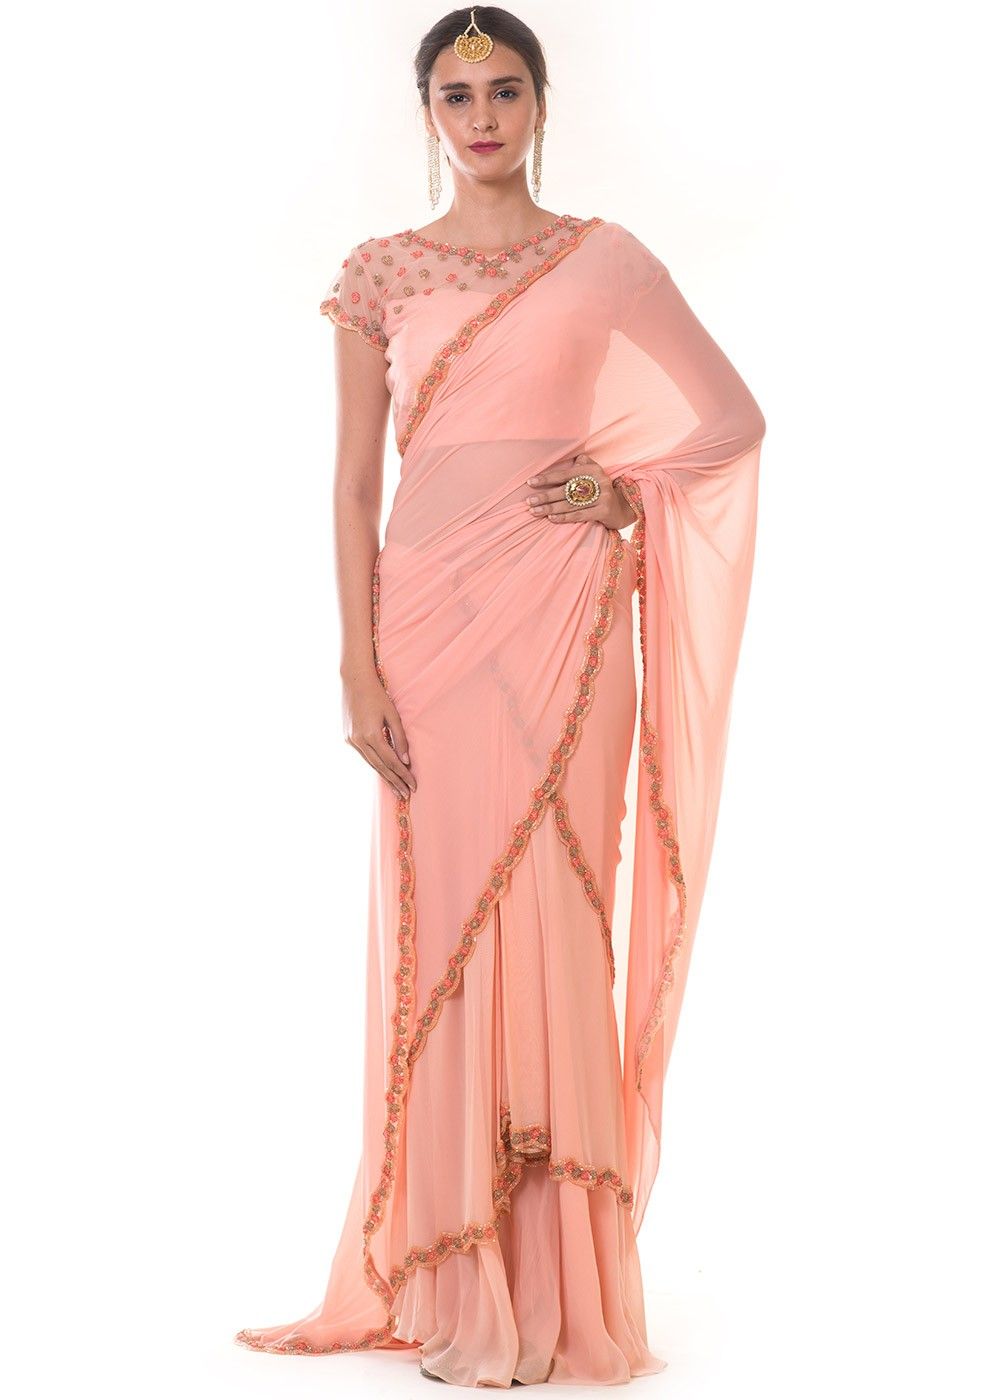 Extravagant Peach Shade Wedding Saree With Golden Blouse